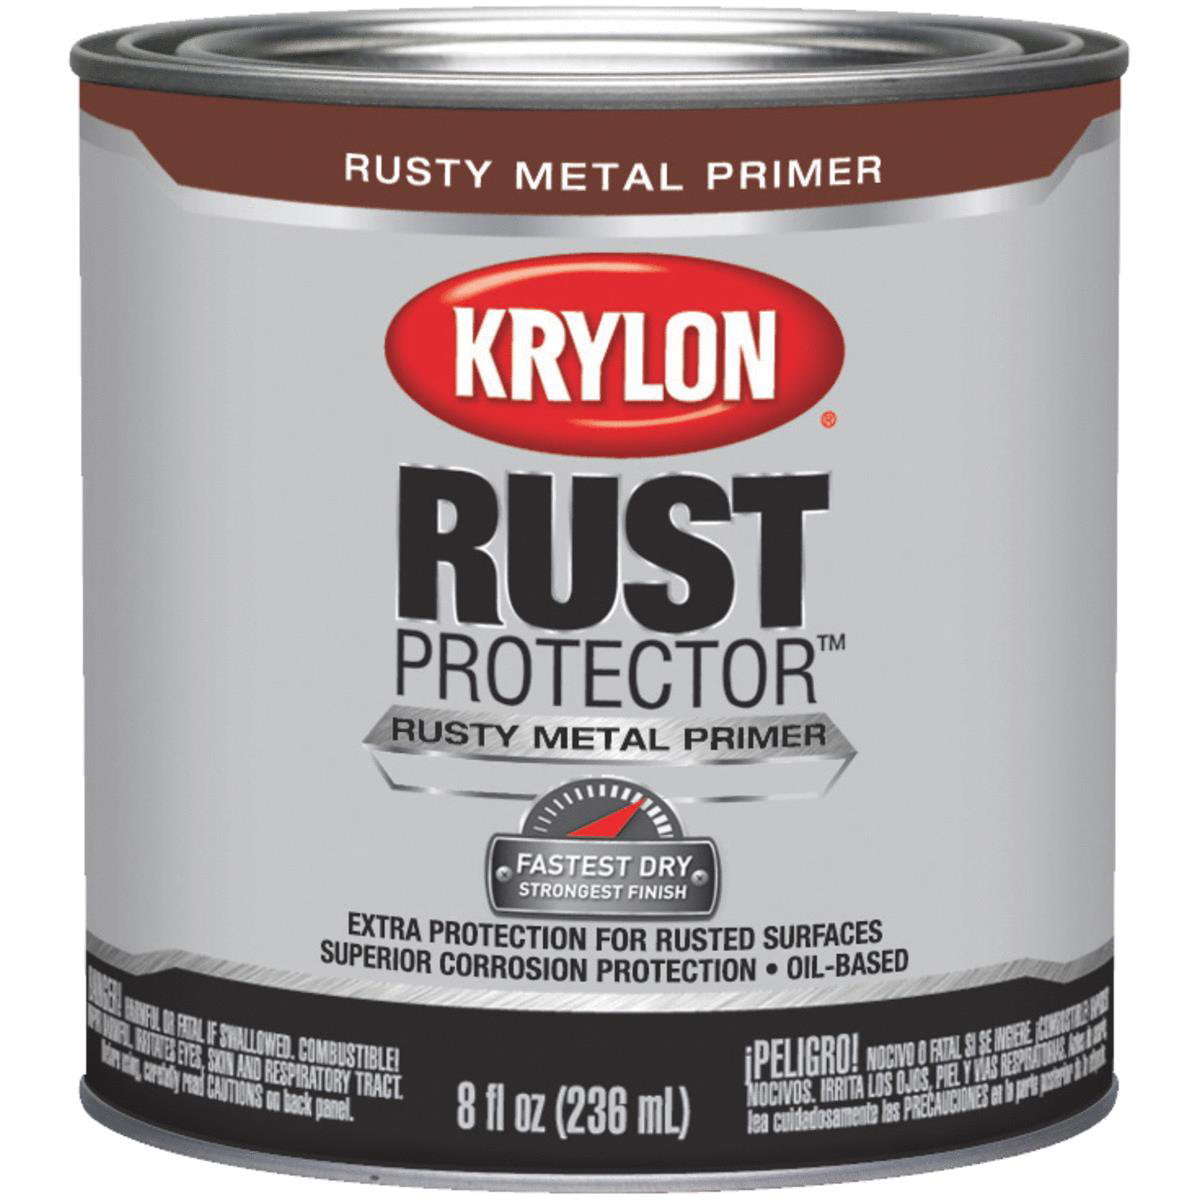 Krylon Rust Primer for Metal 